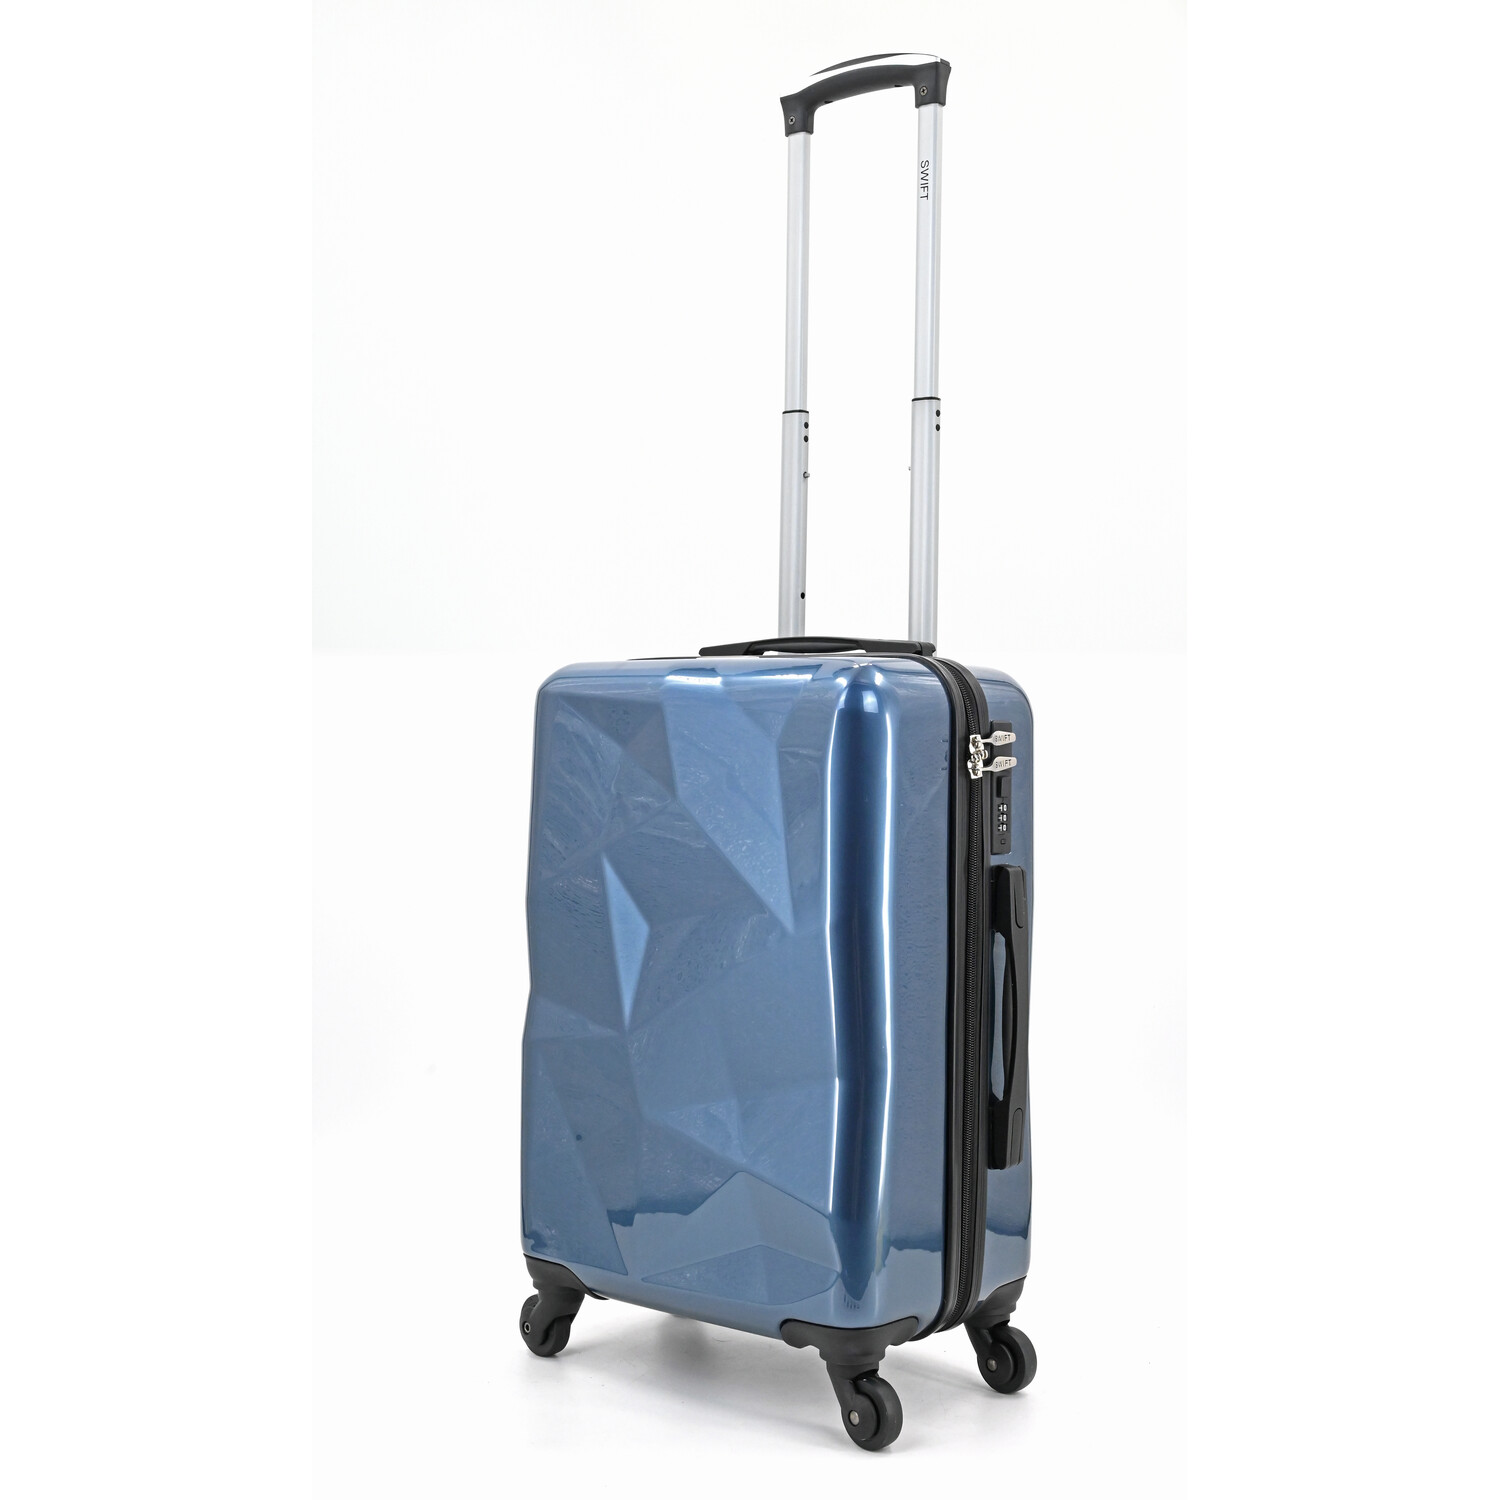 Swift Comet Suitcase - Blue / Cabin Case Image 2